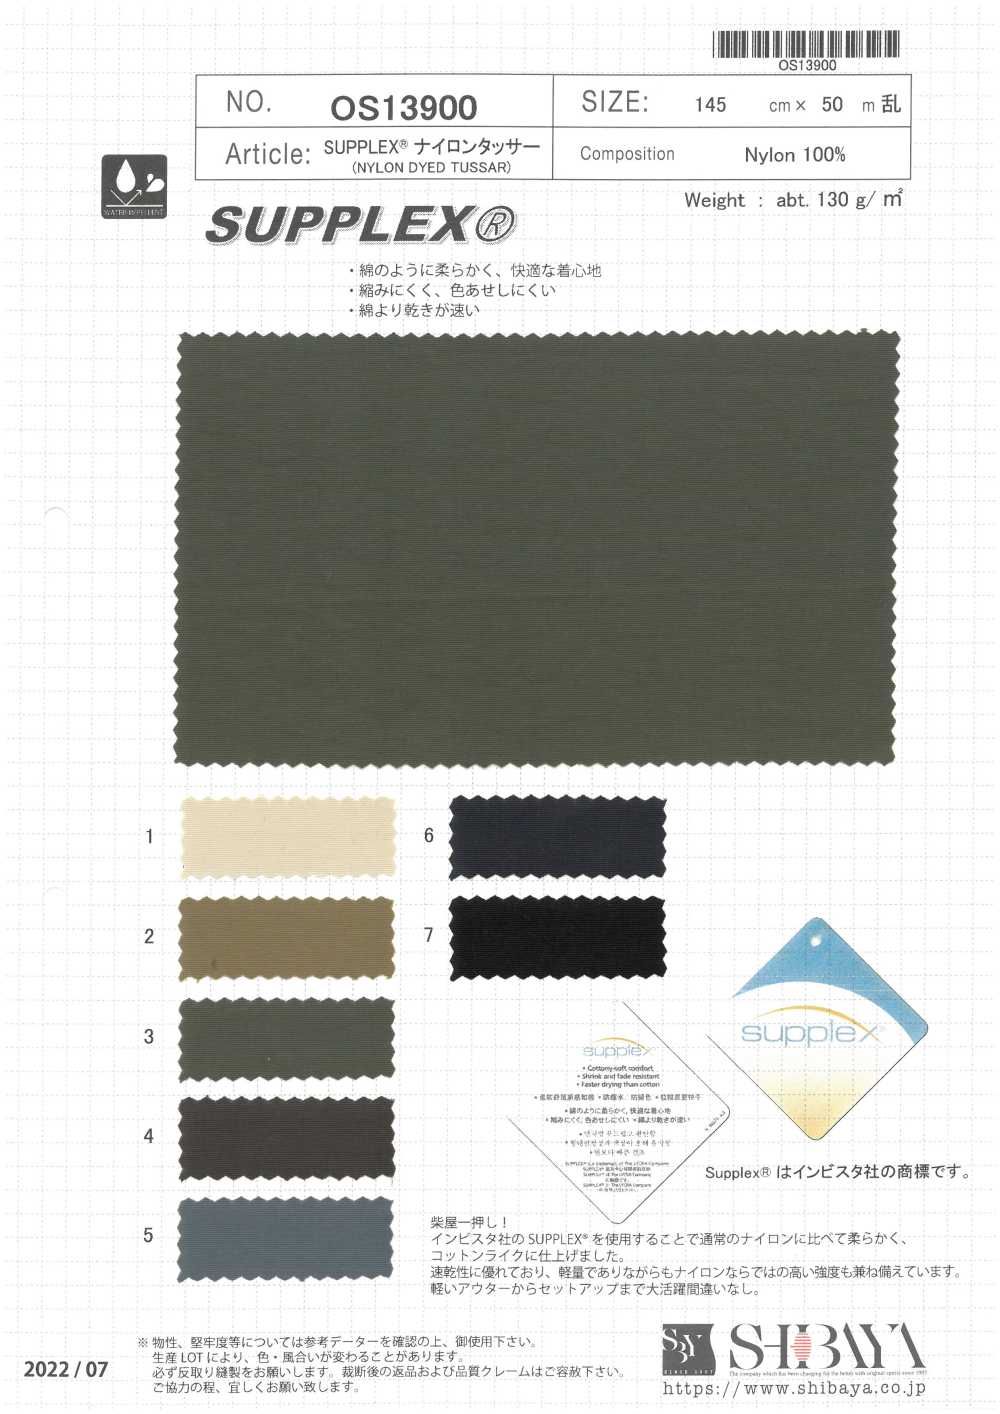 OS13900 Tussard En Nylon SUPPLEX®[Fabrication De Textile] SHIBAYA